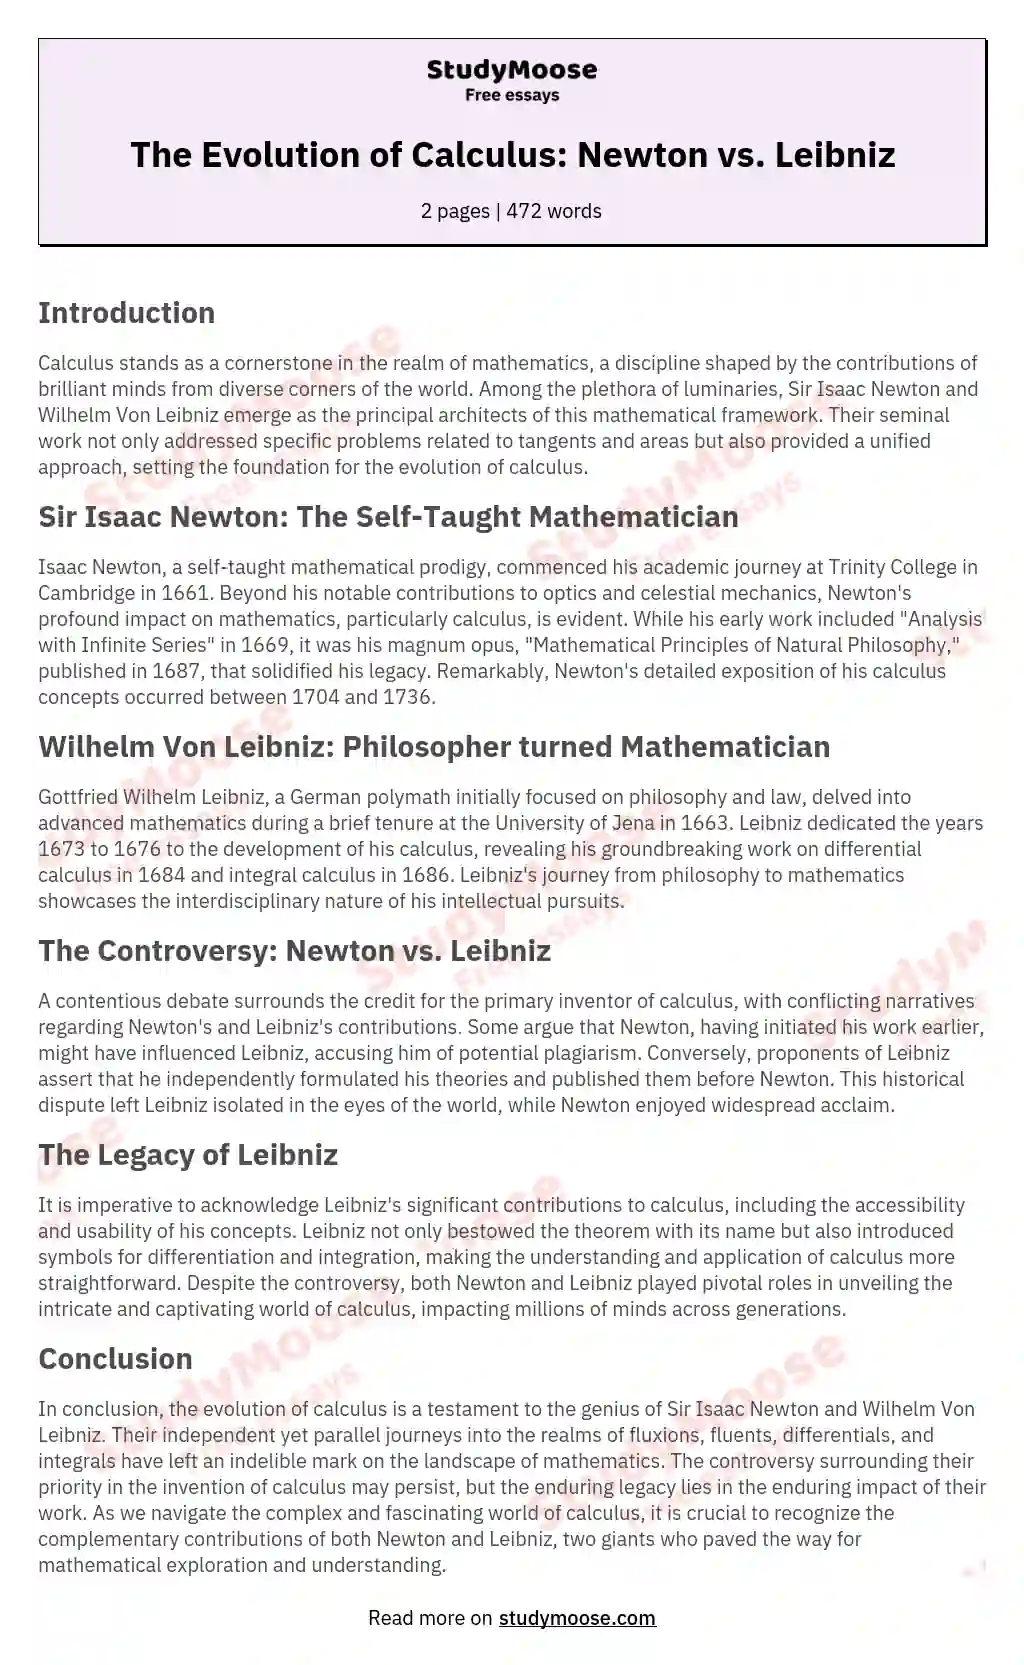 The Evolution of Calculus: Newton vs. Leibniz essay